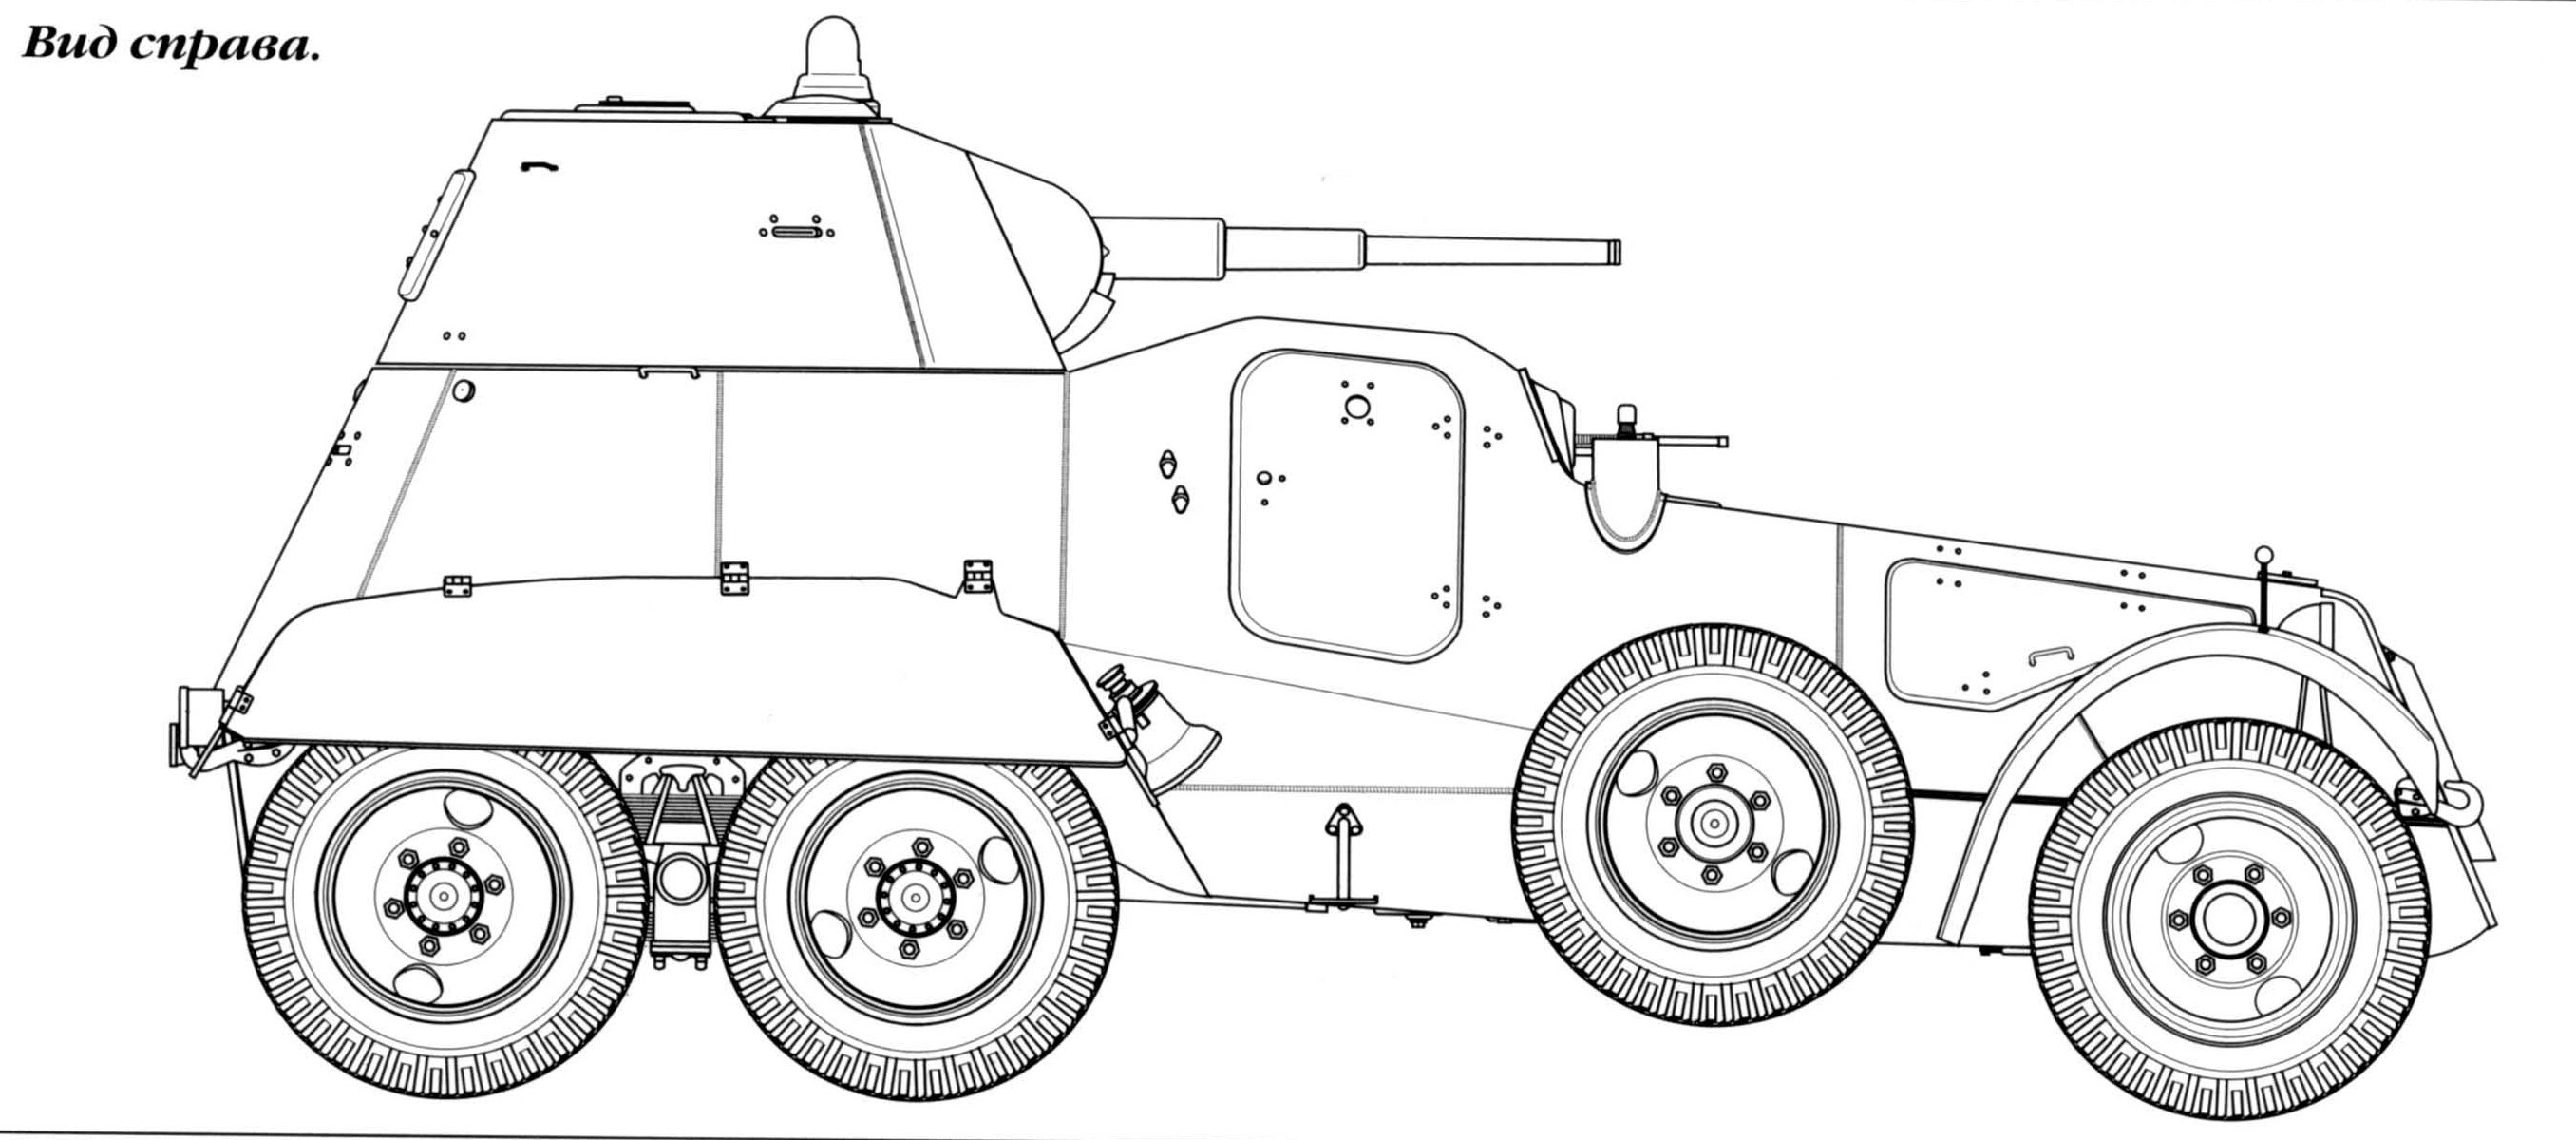 Ба-11 бронеавтомобиль чертеж